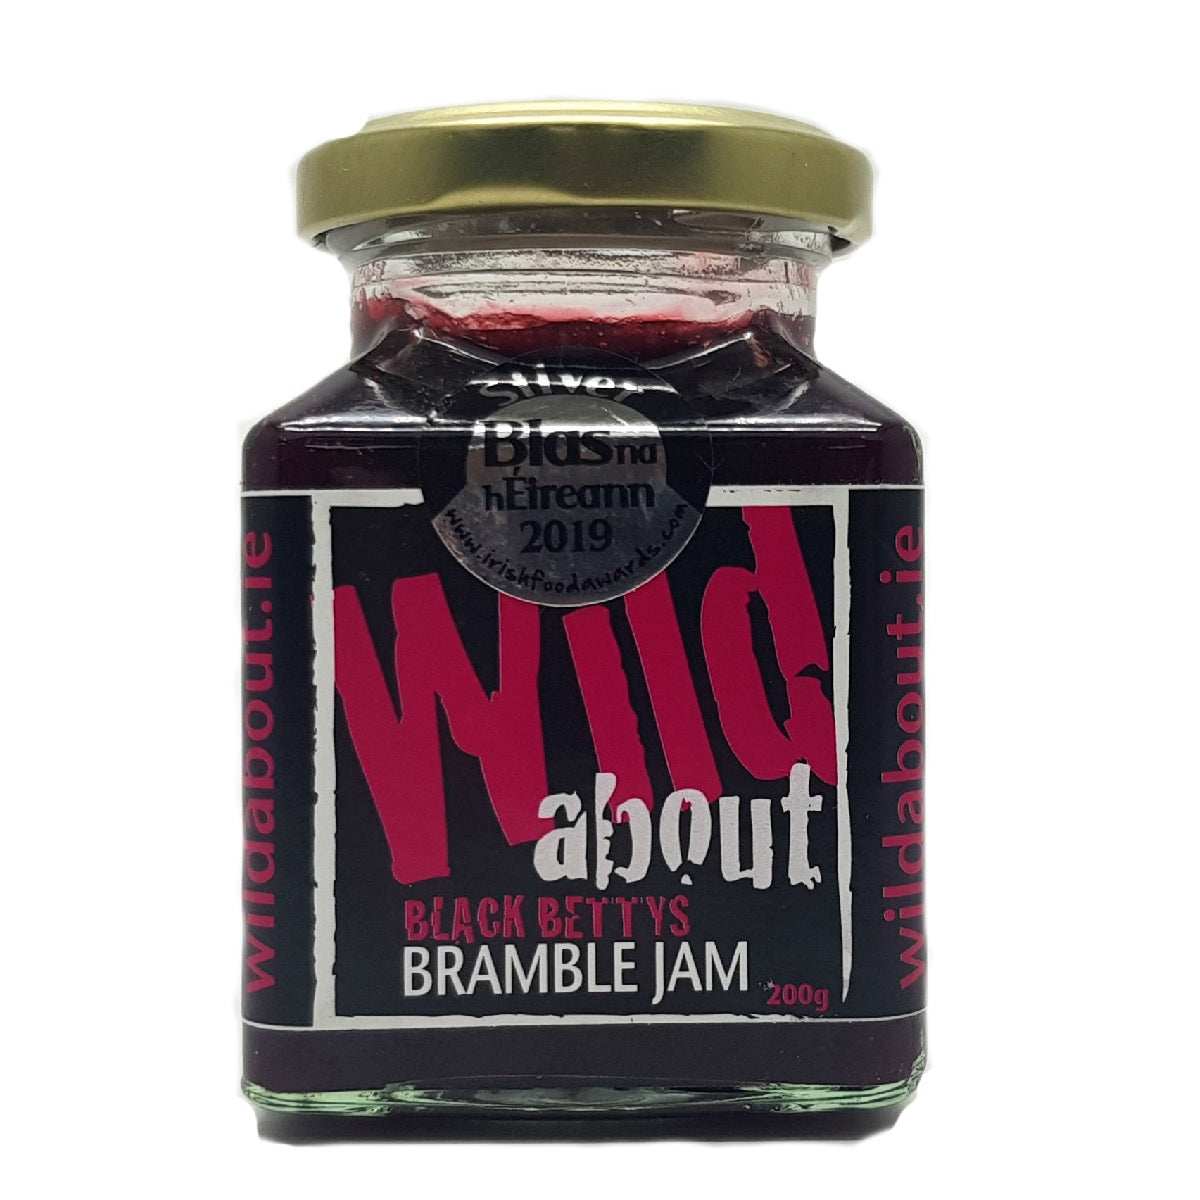 Wild About Black Bettys Bramble Jam 200g